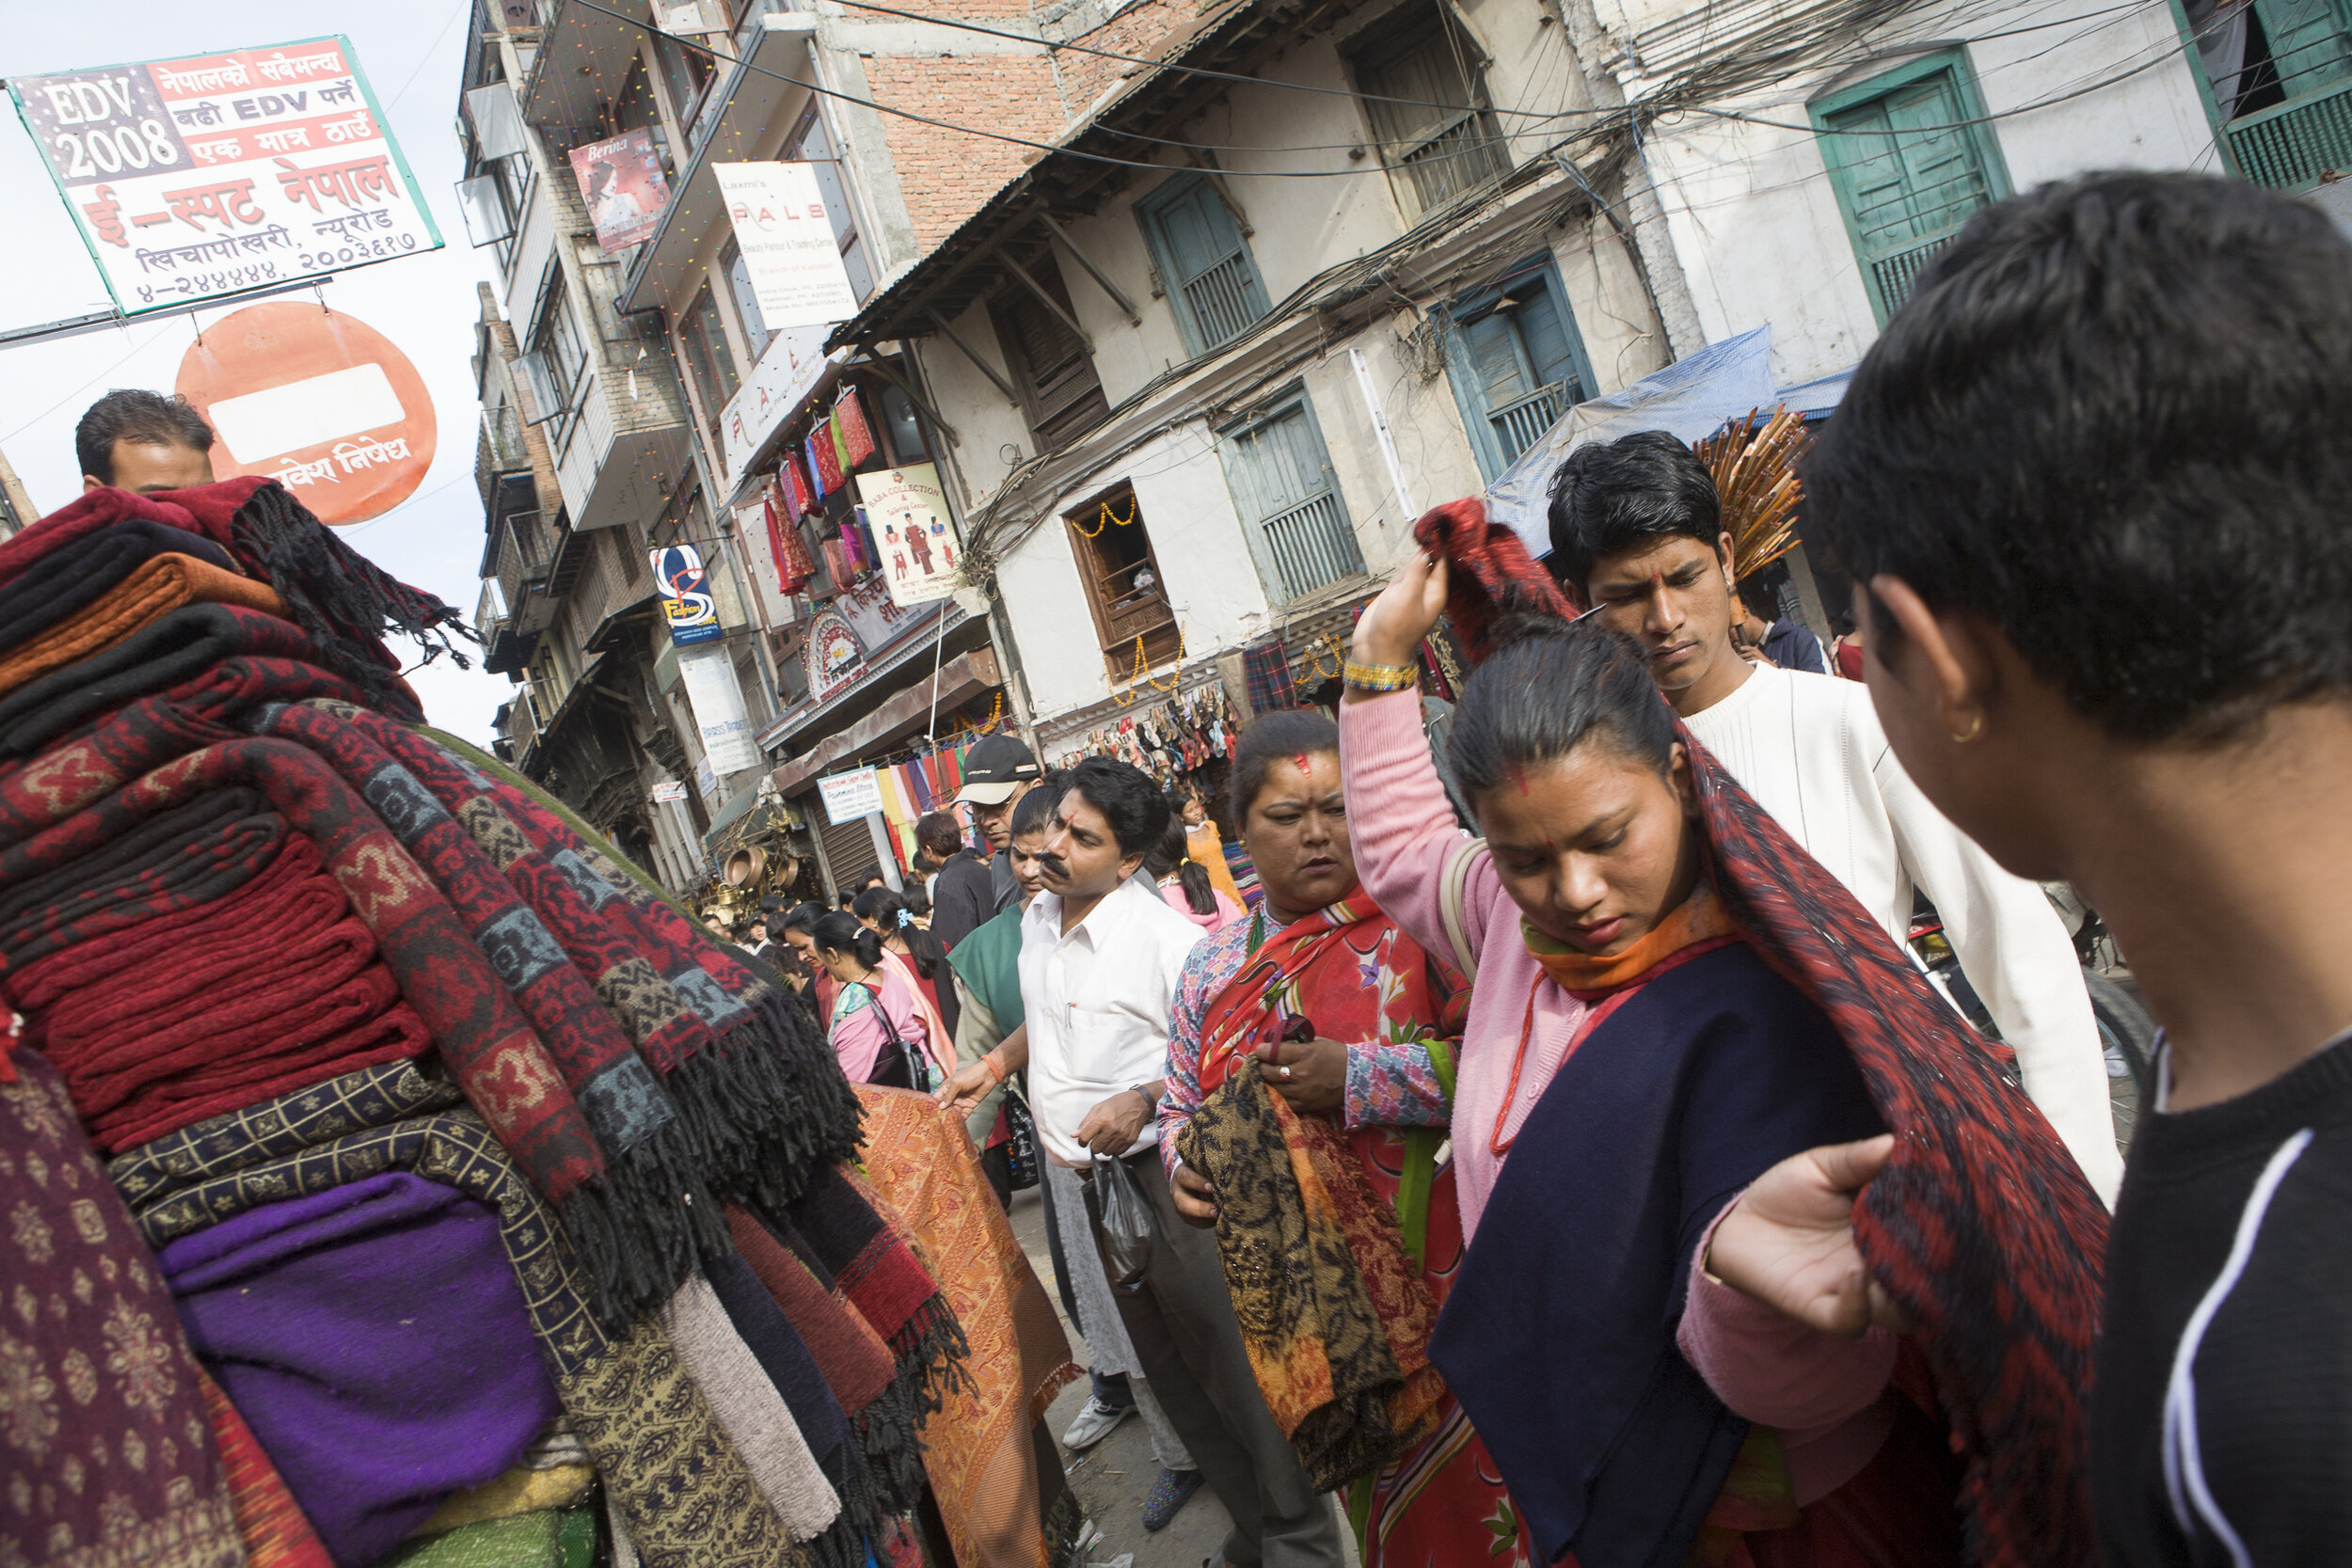  Shawls for sale in Kathmandu.  